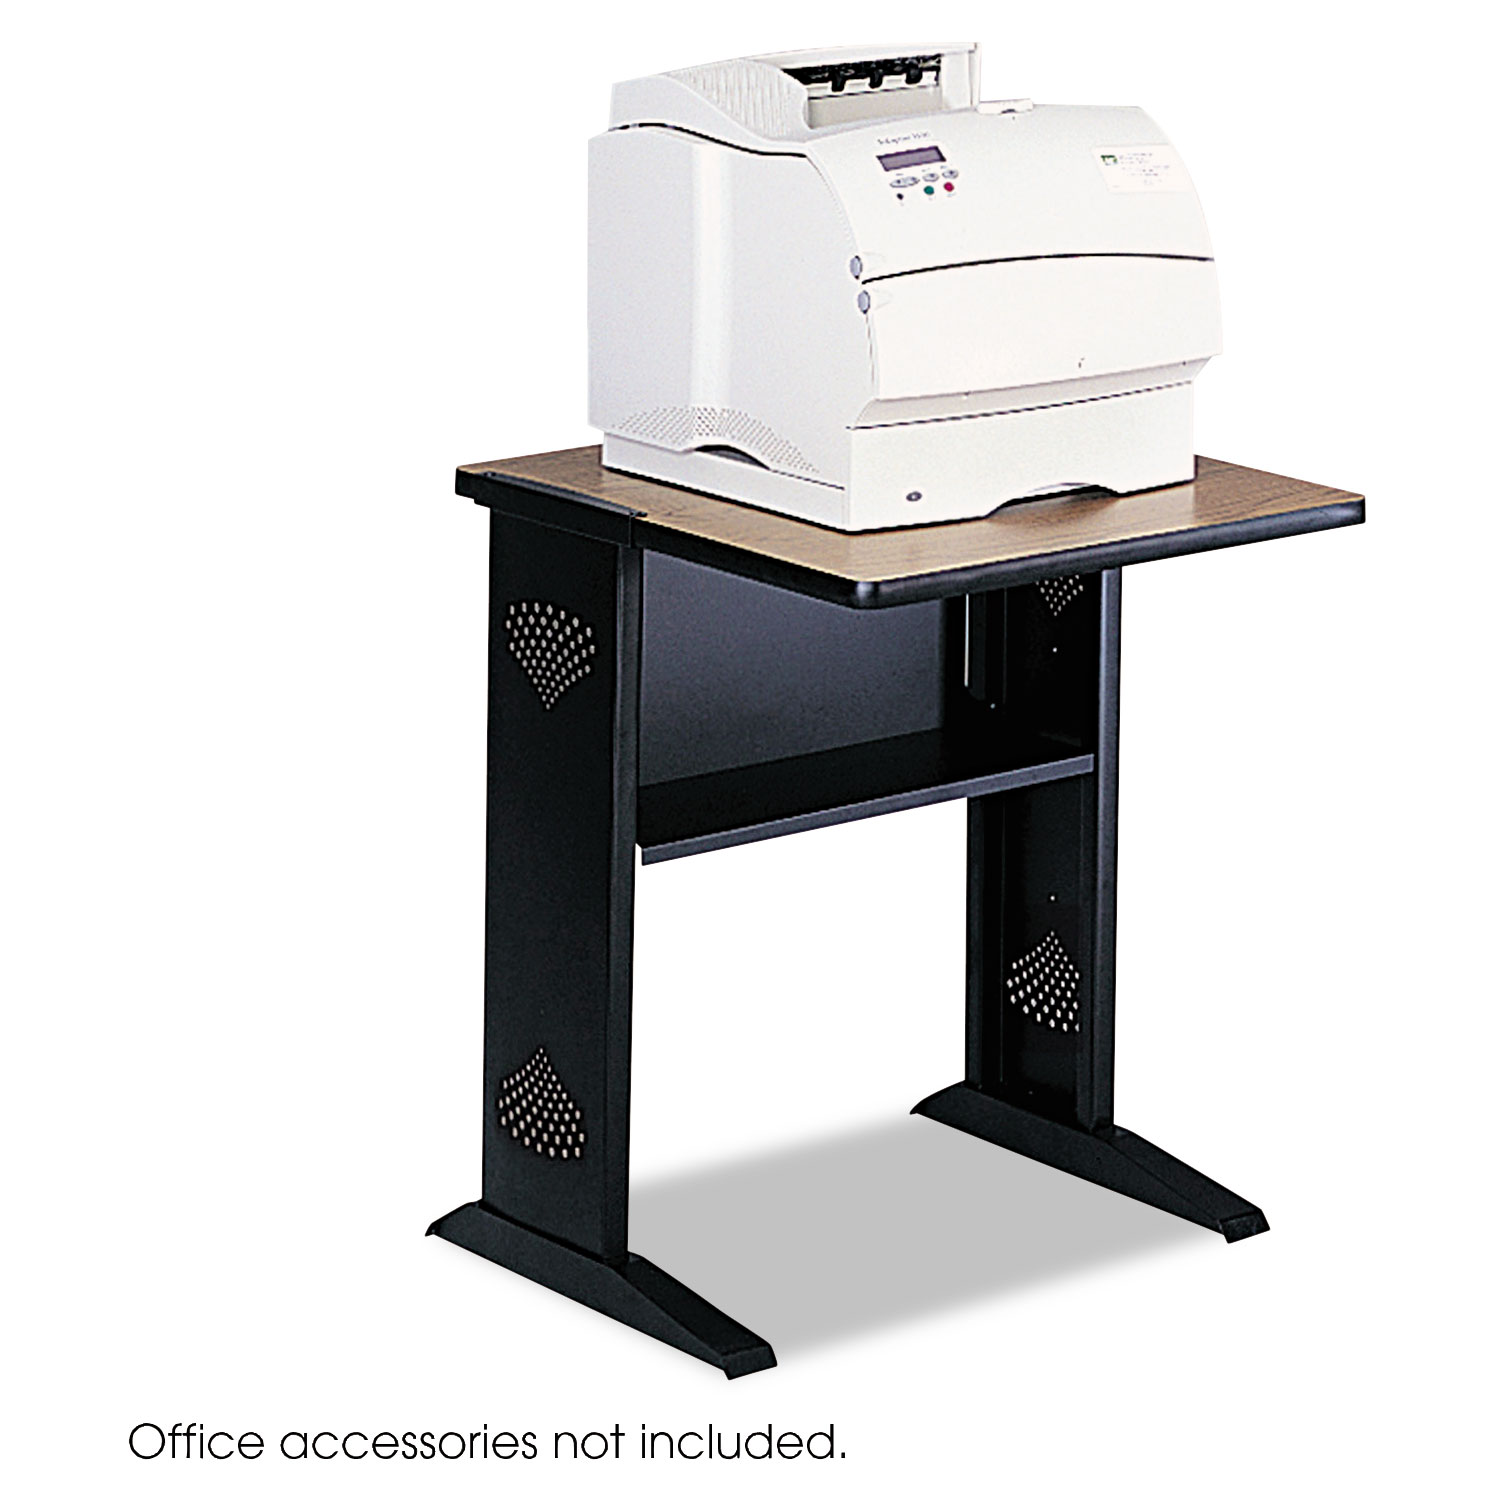  Safco 1934 Fax/Printer Stand w/Reversible Top, 23.5w x 28d x 30h, Medium Oak/Black (SAF1934) 